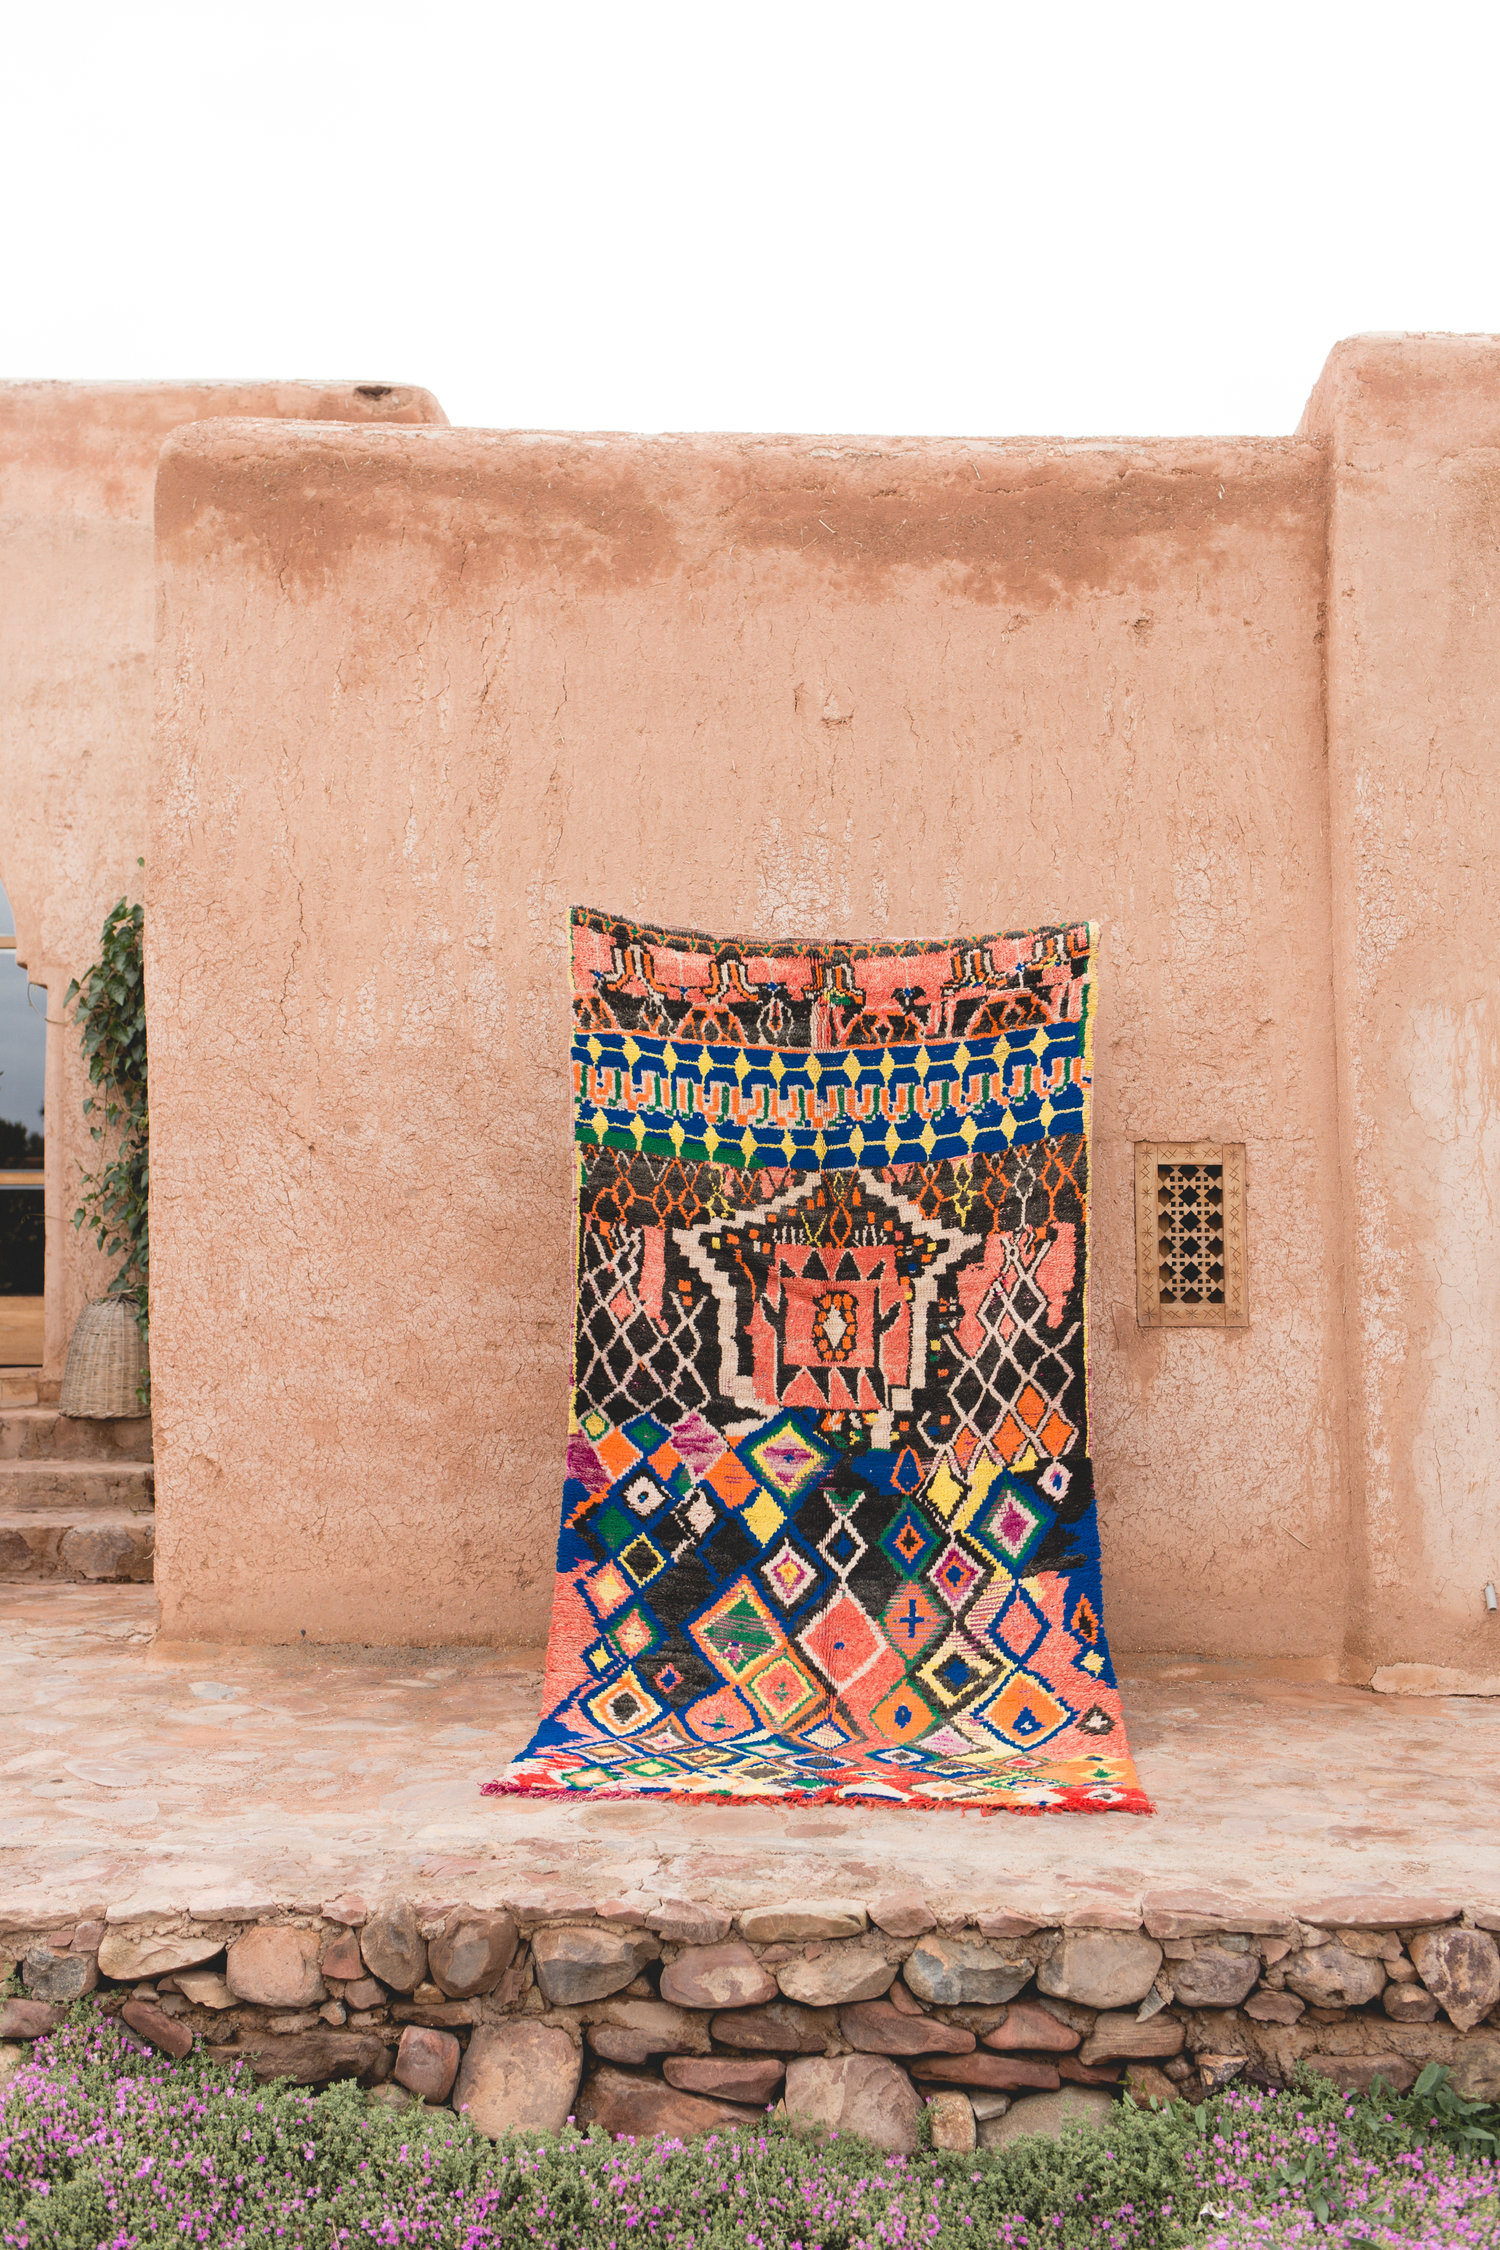 Floor rug Berber Moroccan rug Handmade rug 3.4 FT X 5.5 FT Moroccan Wedding rug Vintage rug Woven rug